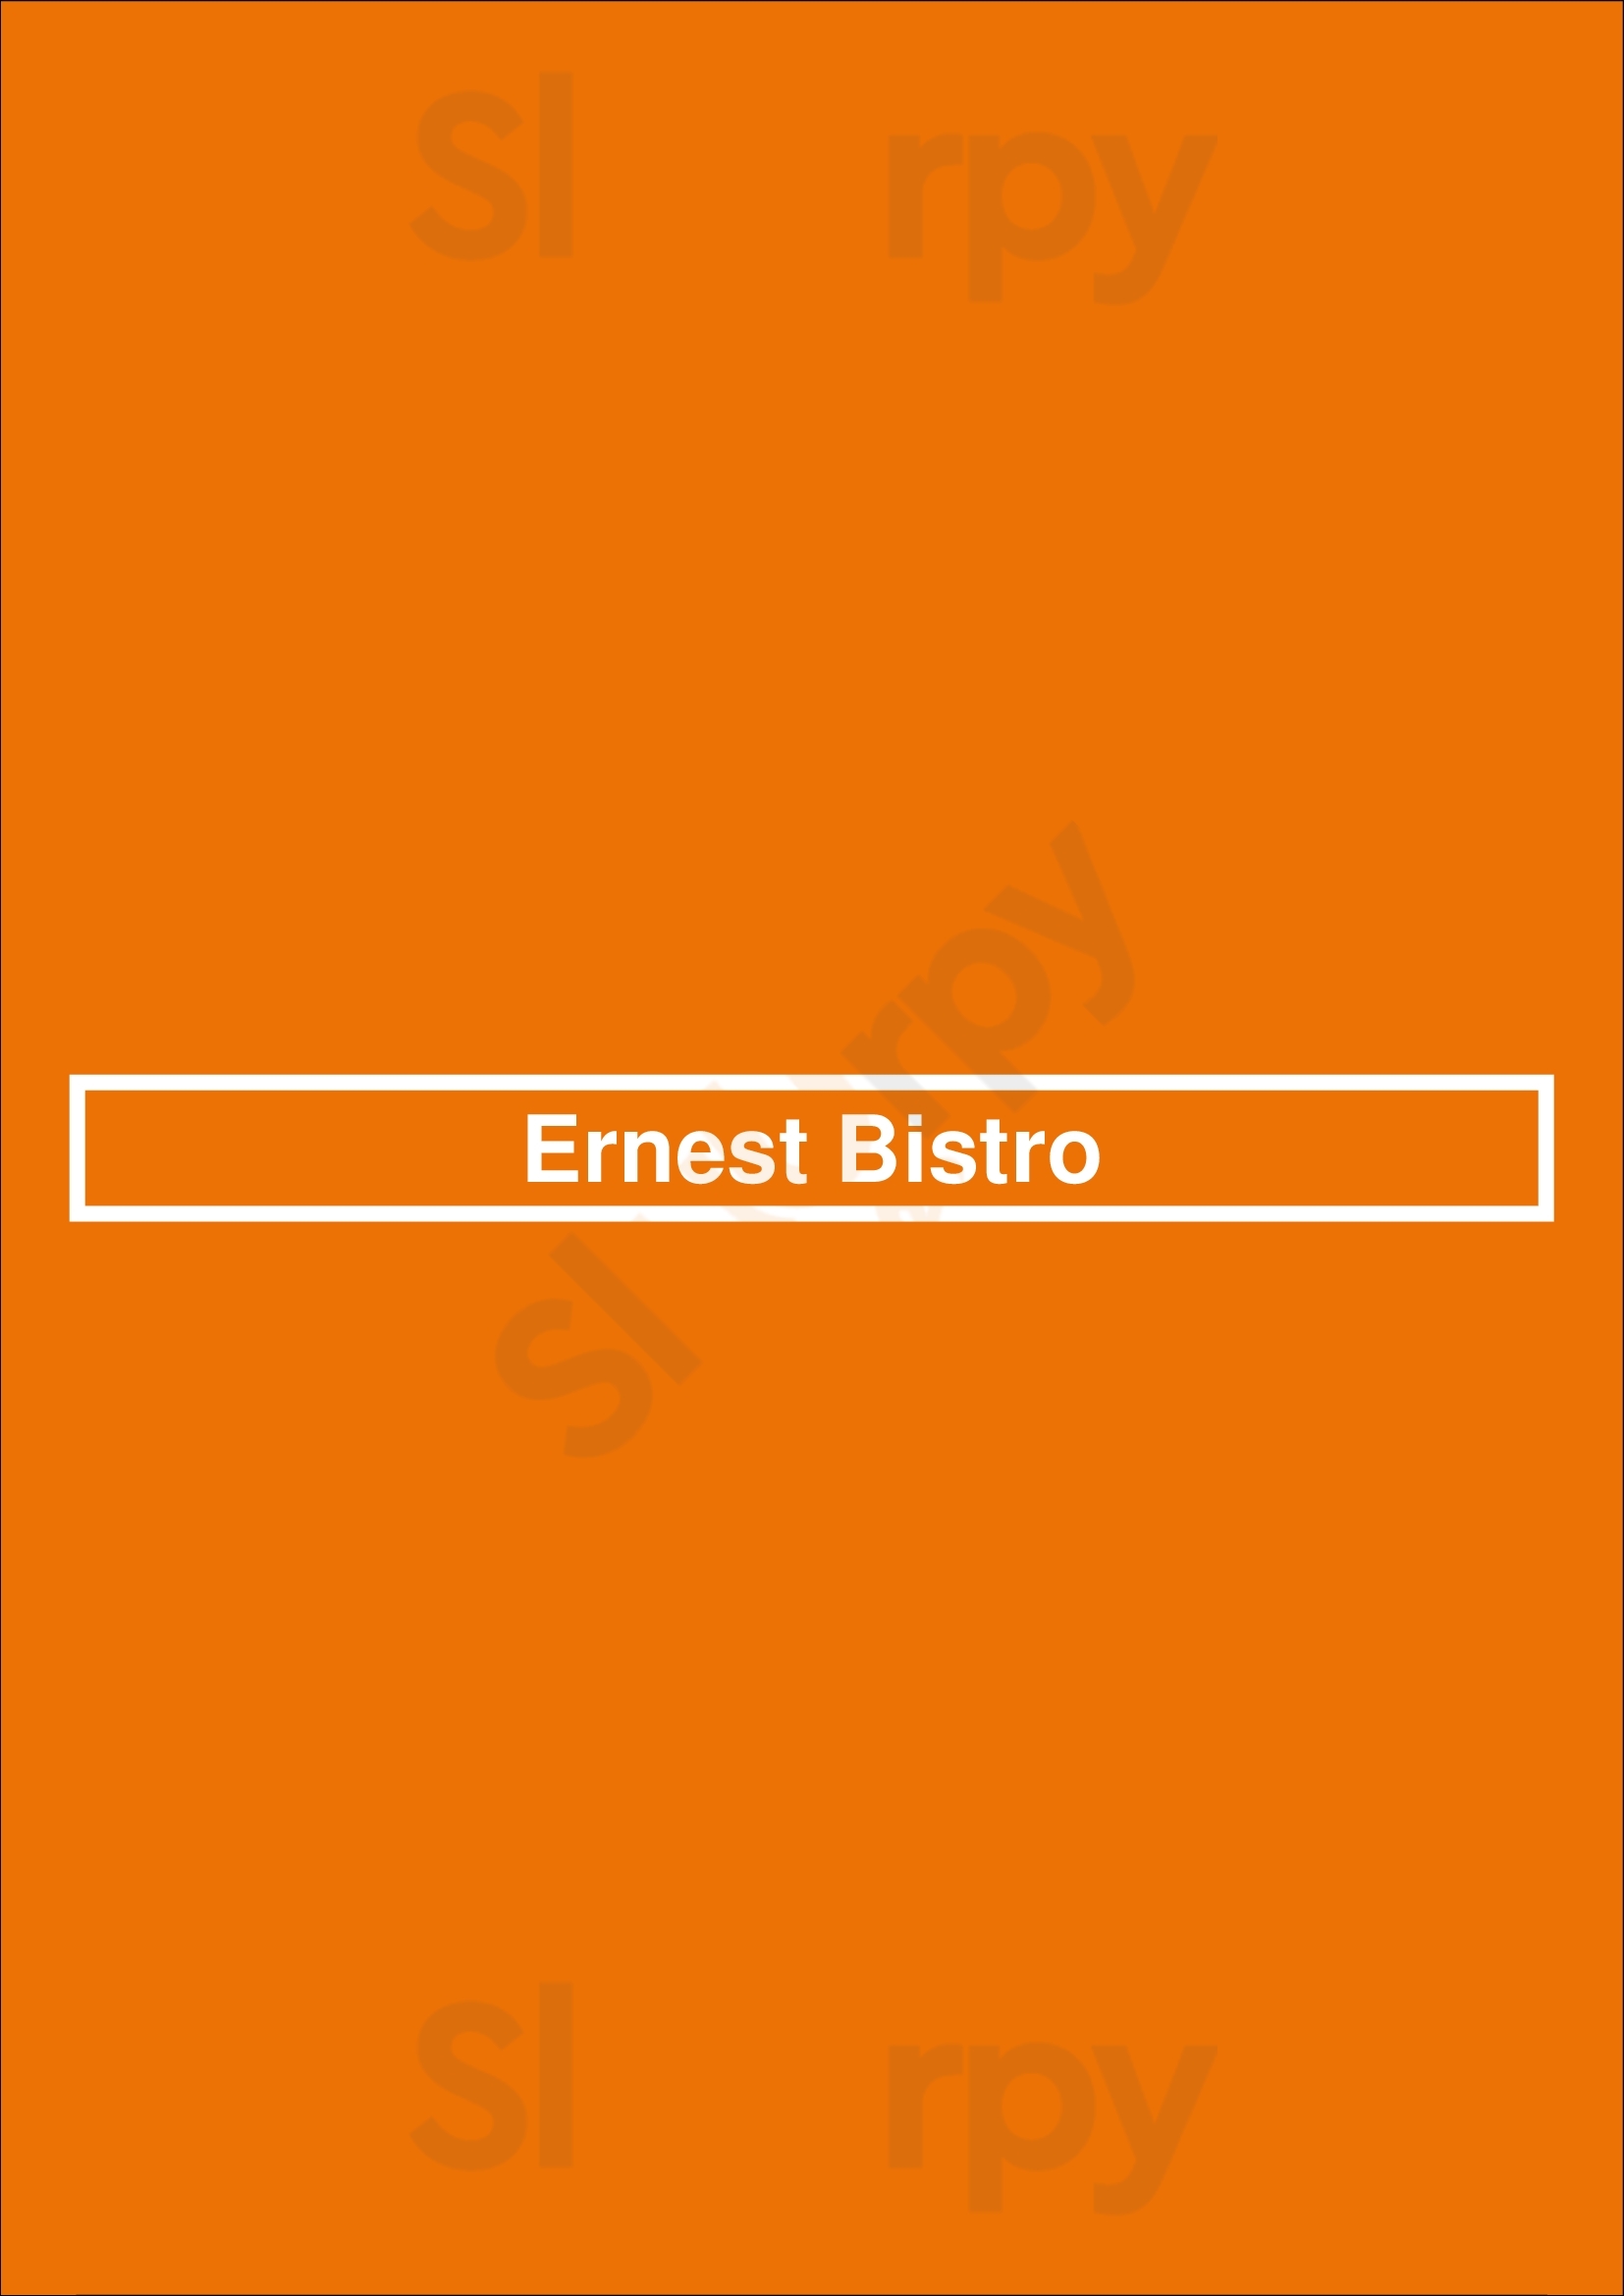 Ernest Bistro Anvers Menu - 1